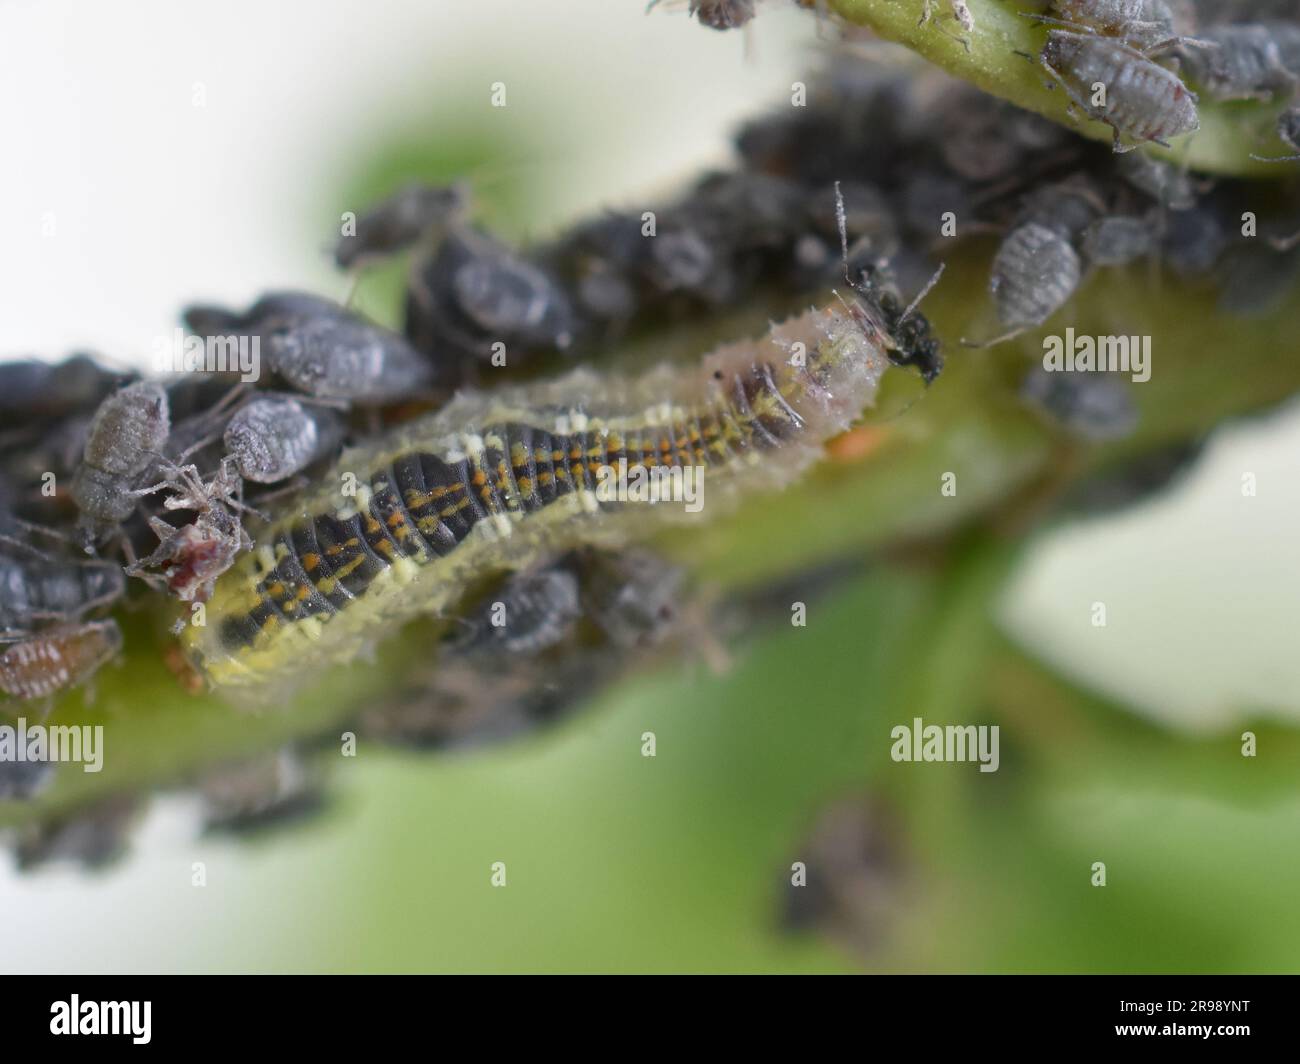 Larva of syrphus hover fly feeding on aphids on bird cherry tree Stock Photo